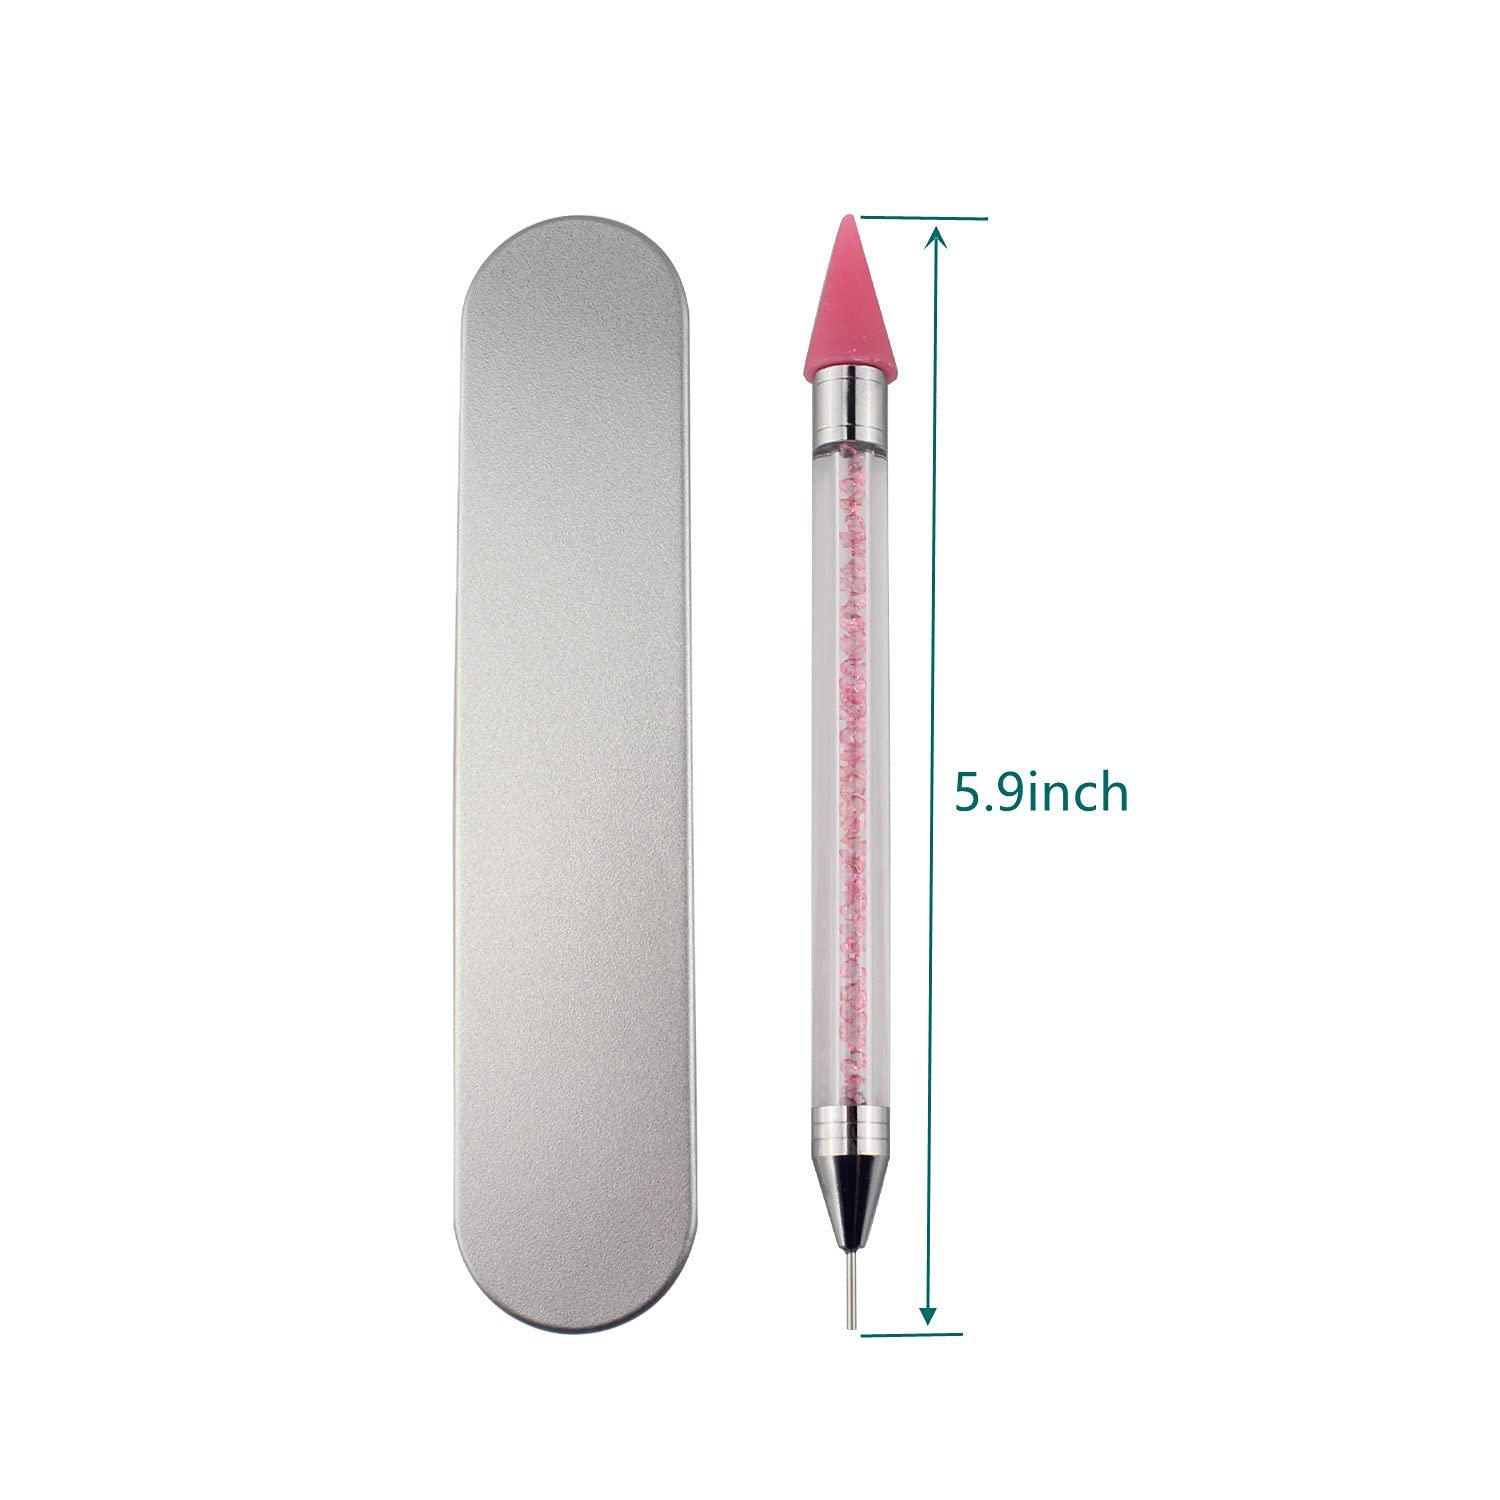 Wax Pen For Rhinestones Dual-ended Nail Dotting Pencil Wax Head